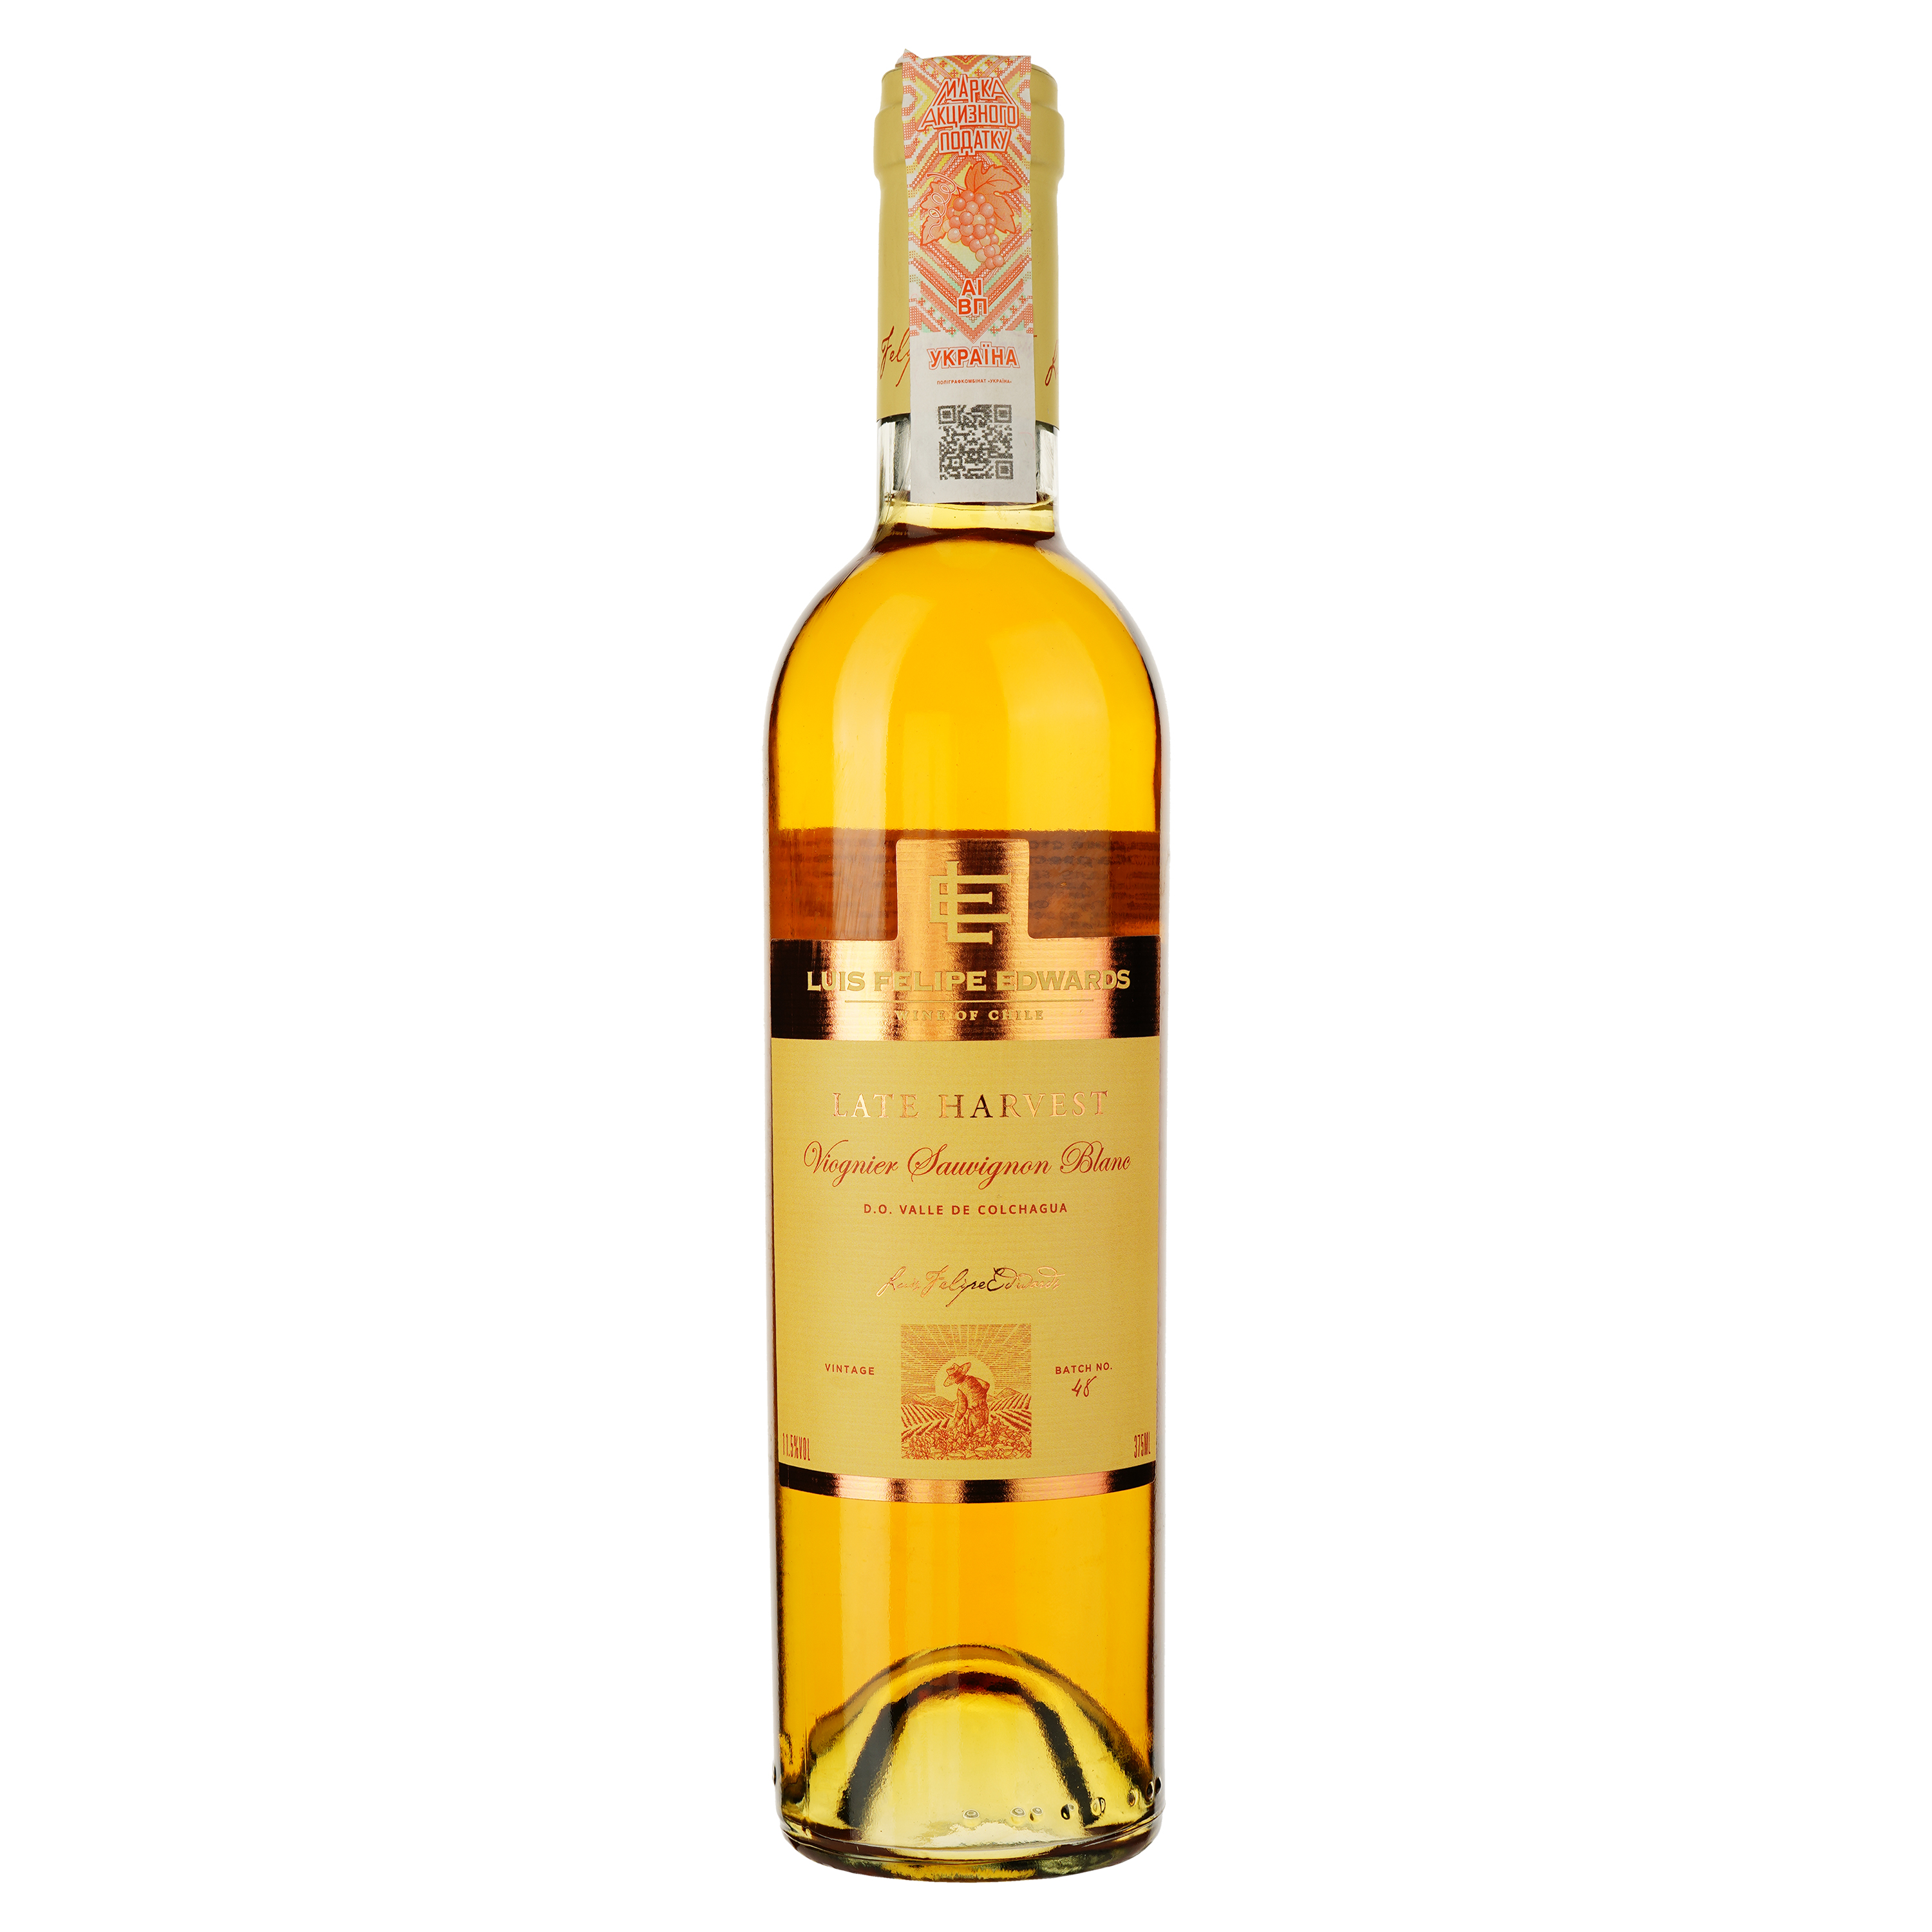 Вино Luis Felipe Edwards Late Harvest Viognier Sauvignon Blanc, белое, сладкое, 0,375 л - фото 1